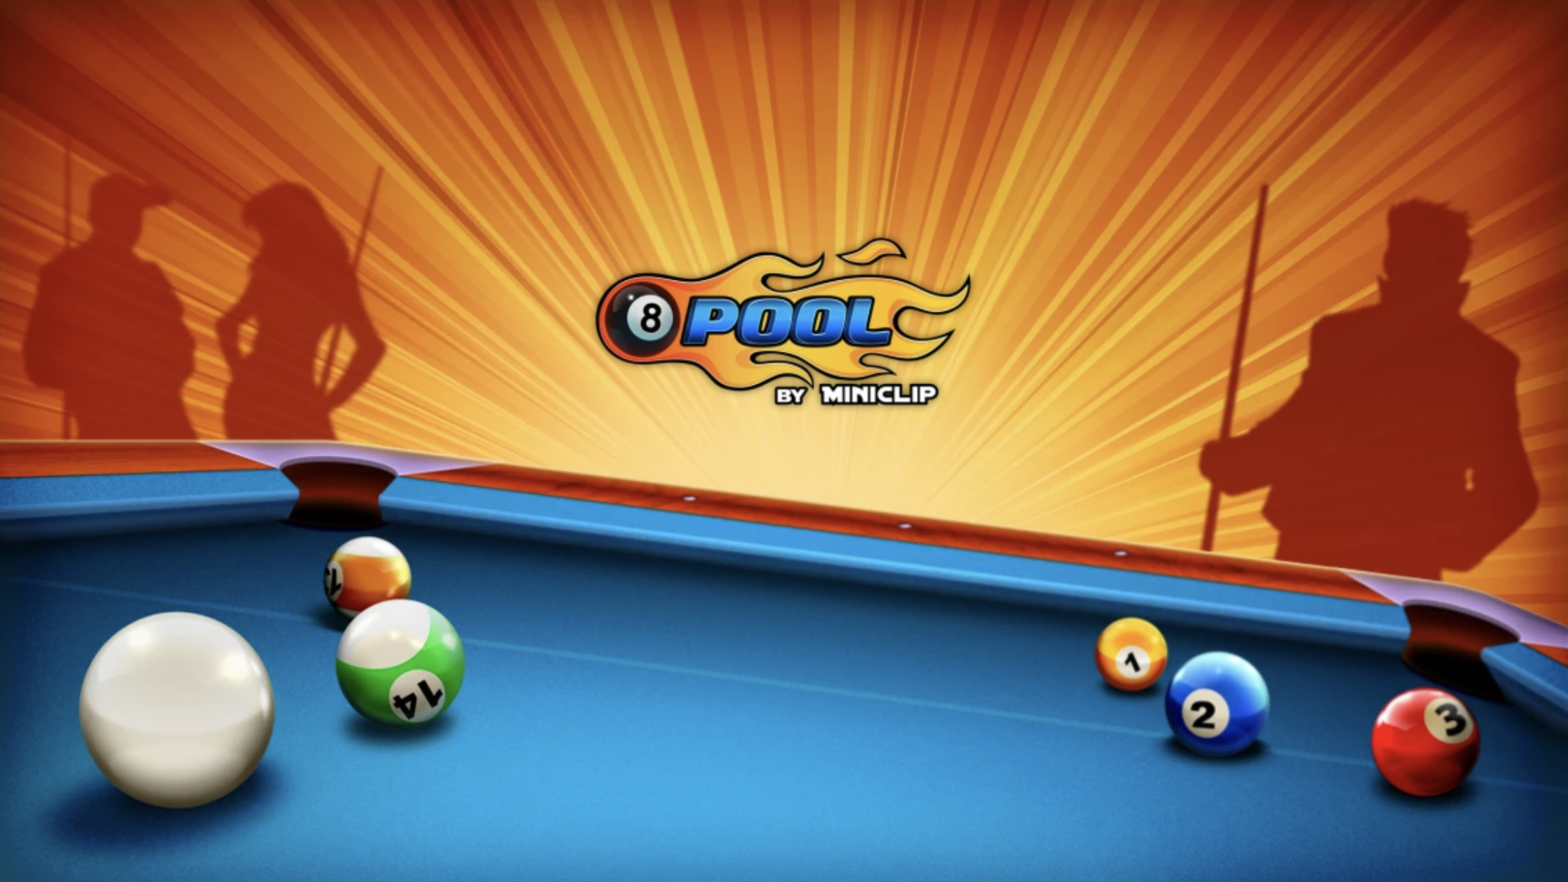 8 Ball Pool by Miniclip